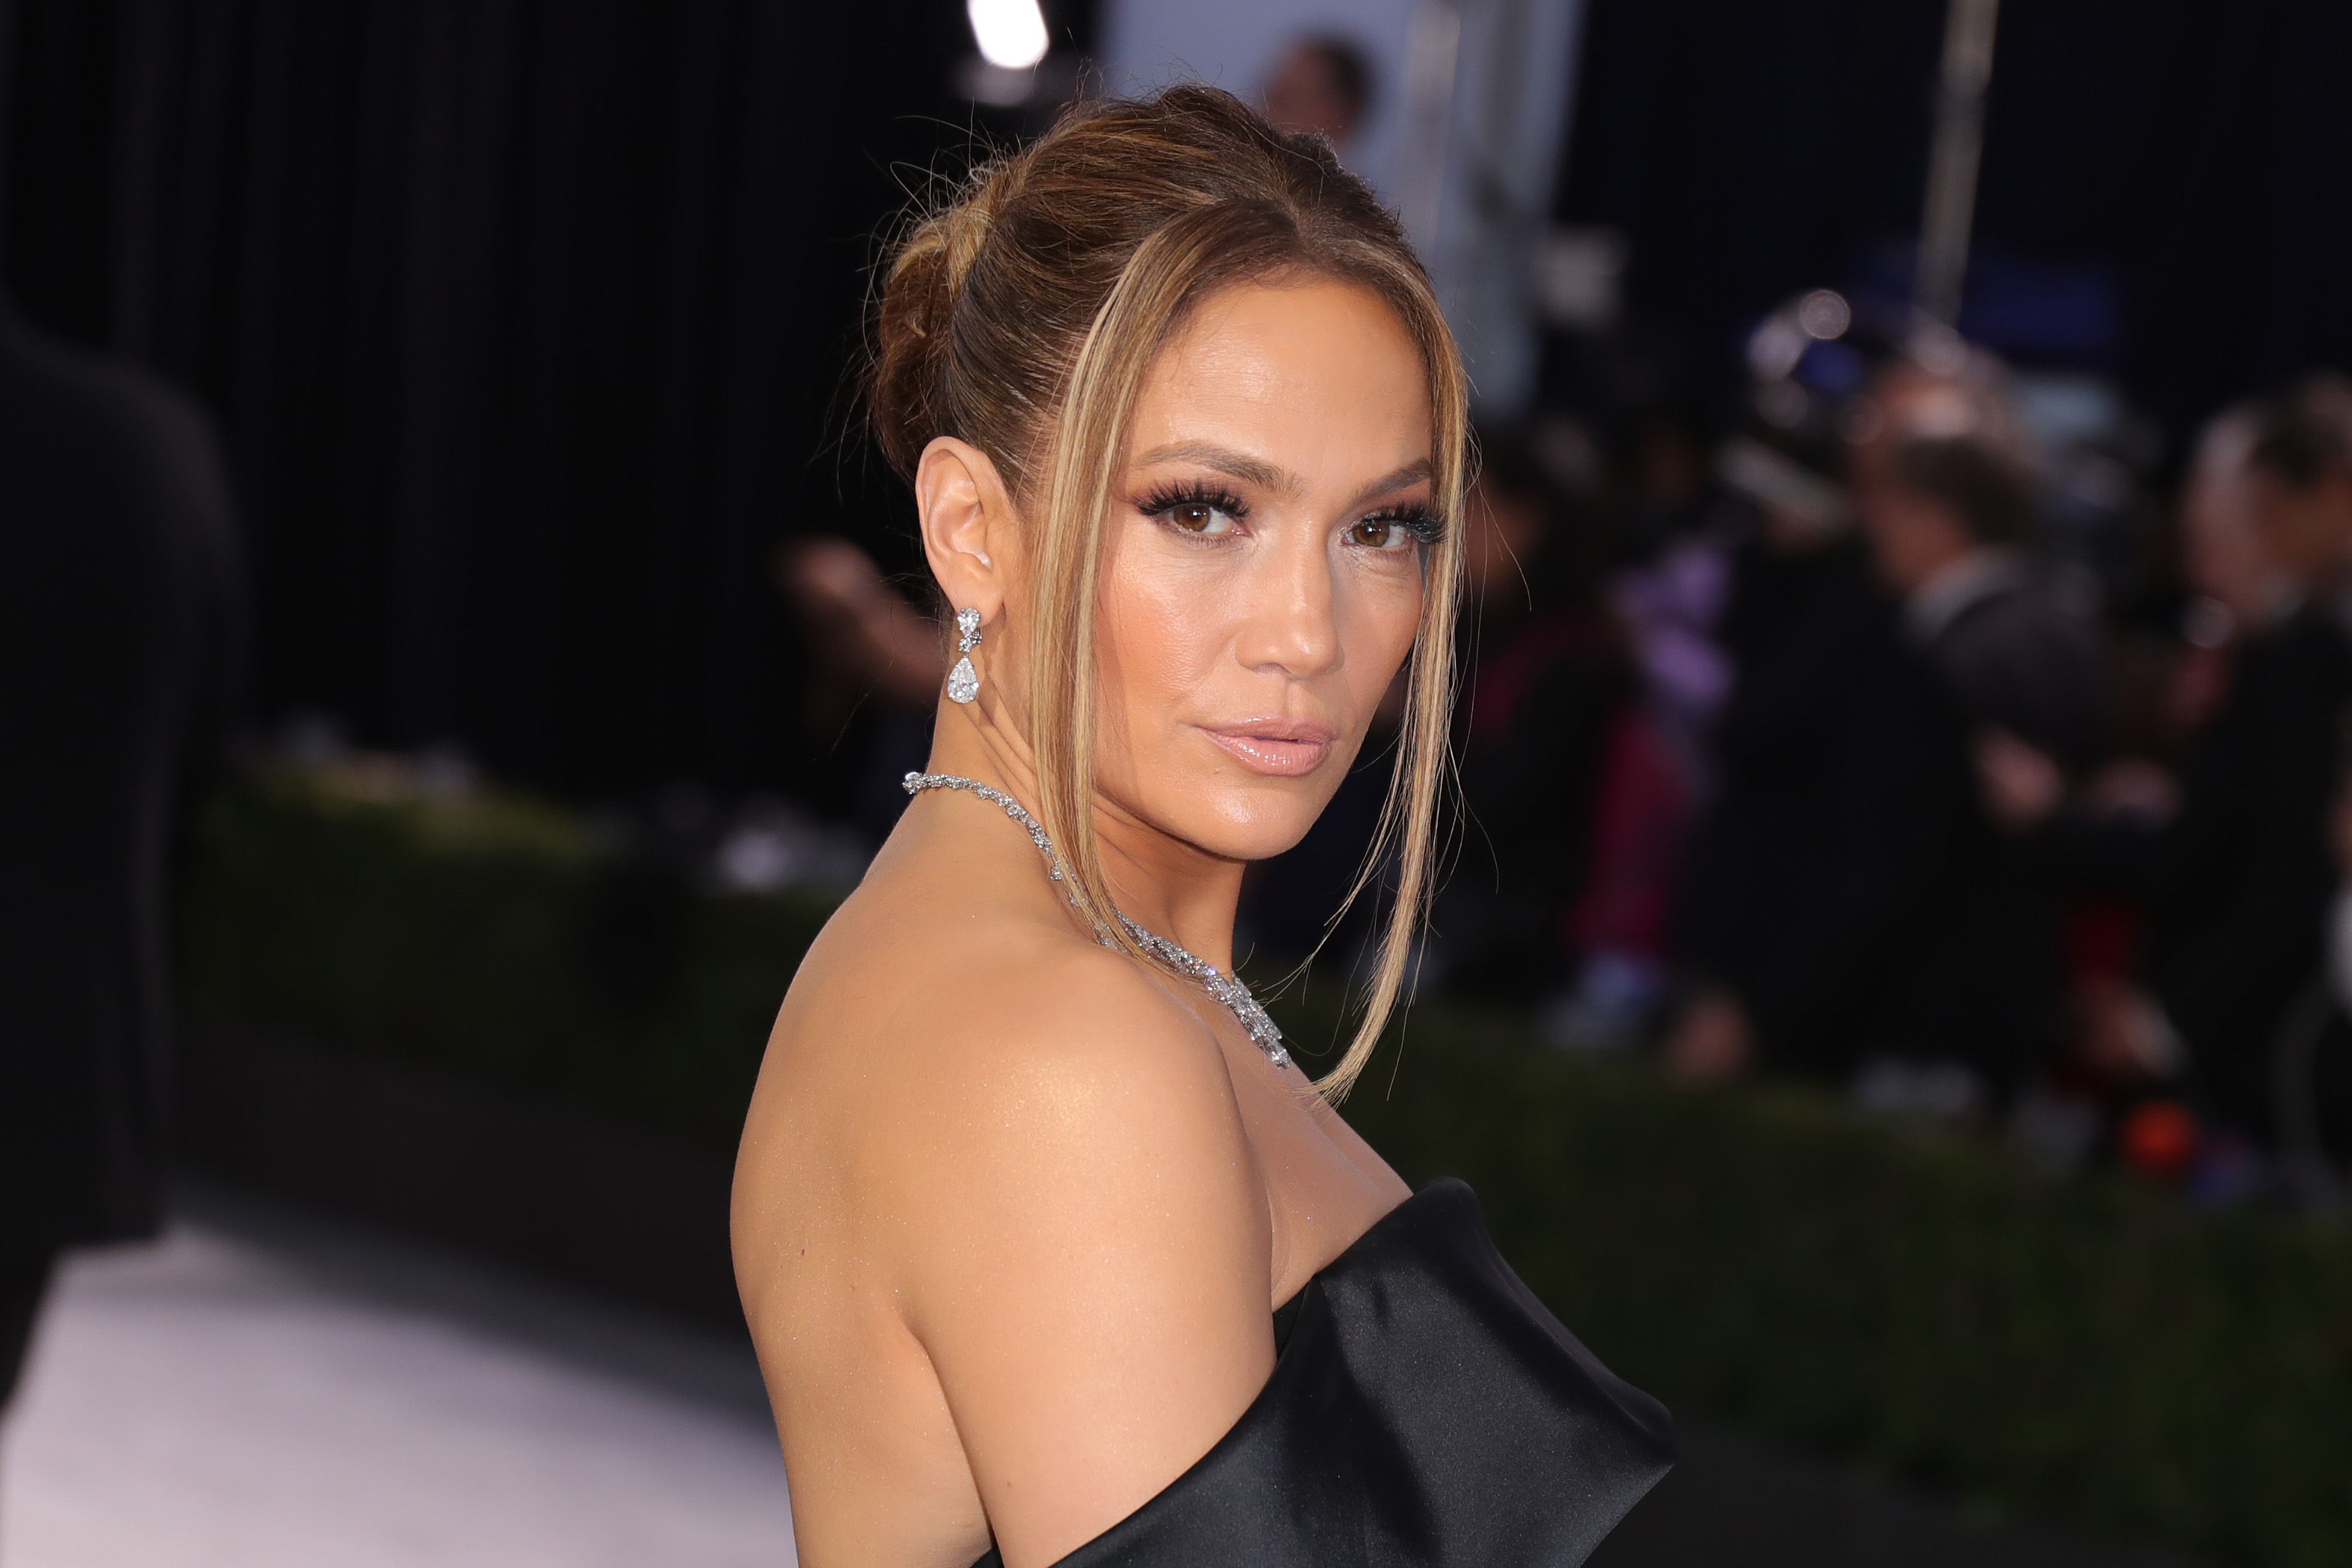 Jennifer Lopez Gets Candid About Her Oscars Snub For “Hustlers”